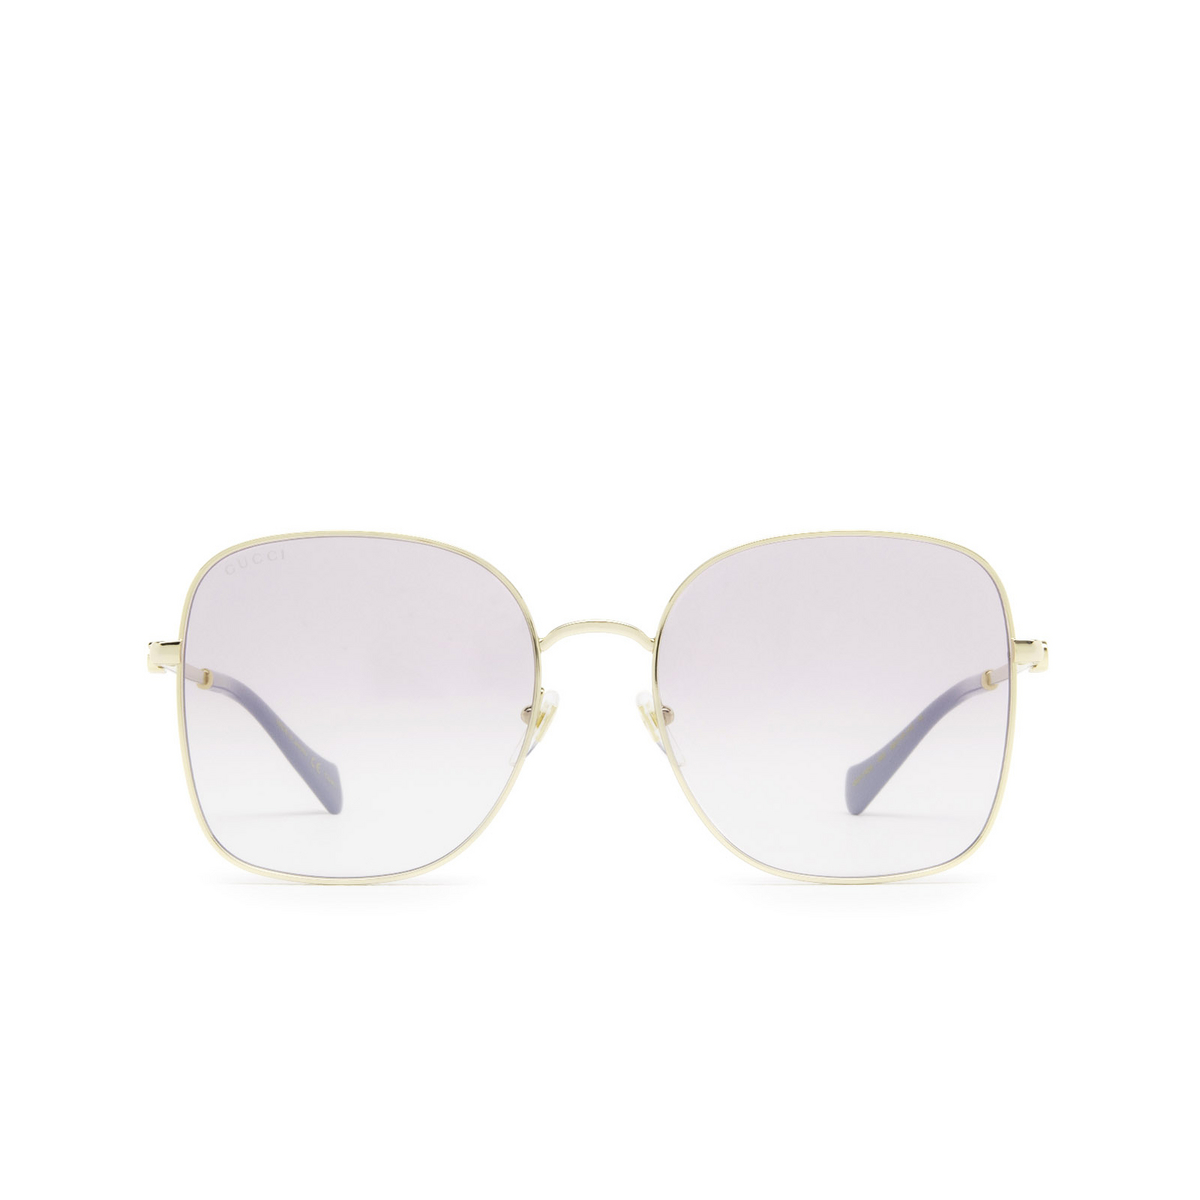 Gucci® Square Sunglasses: GG1143S color 003 Gold - front view